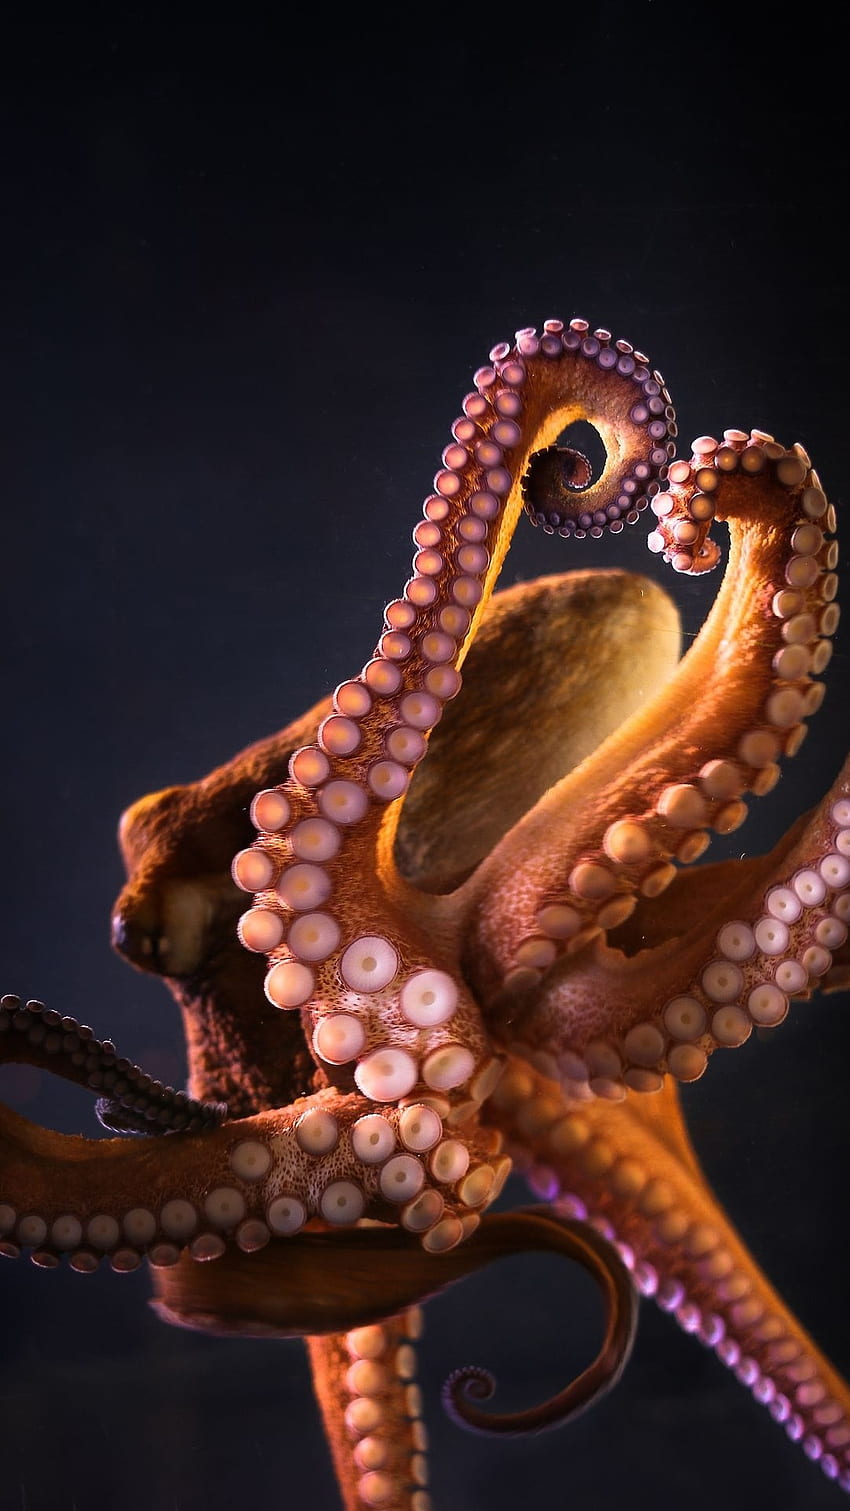 Octopus Wallpapers HD Free Download  PixelsTalkNet